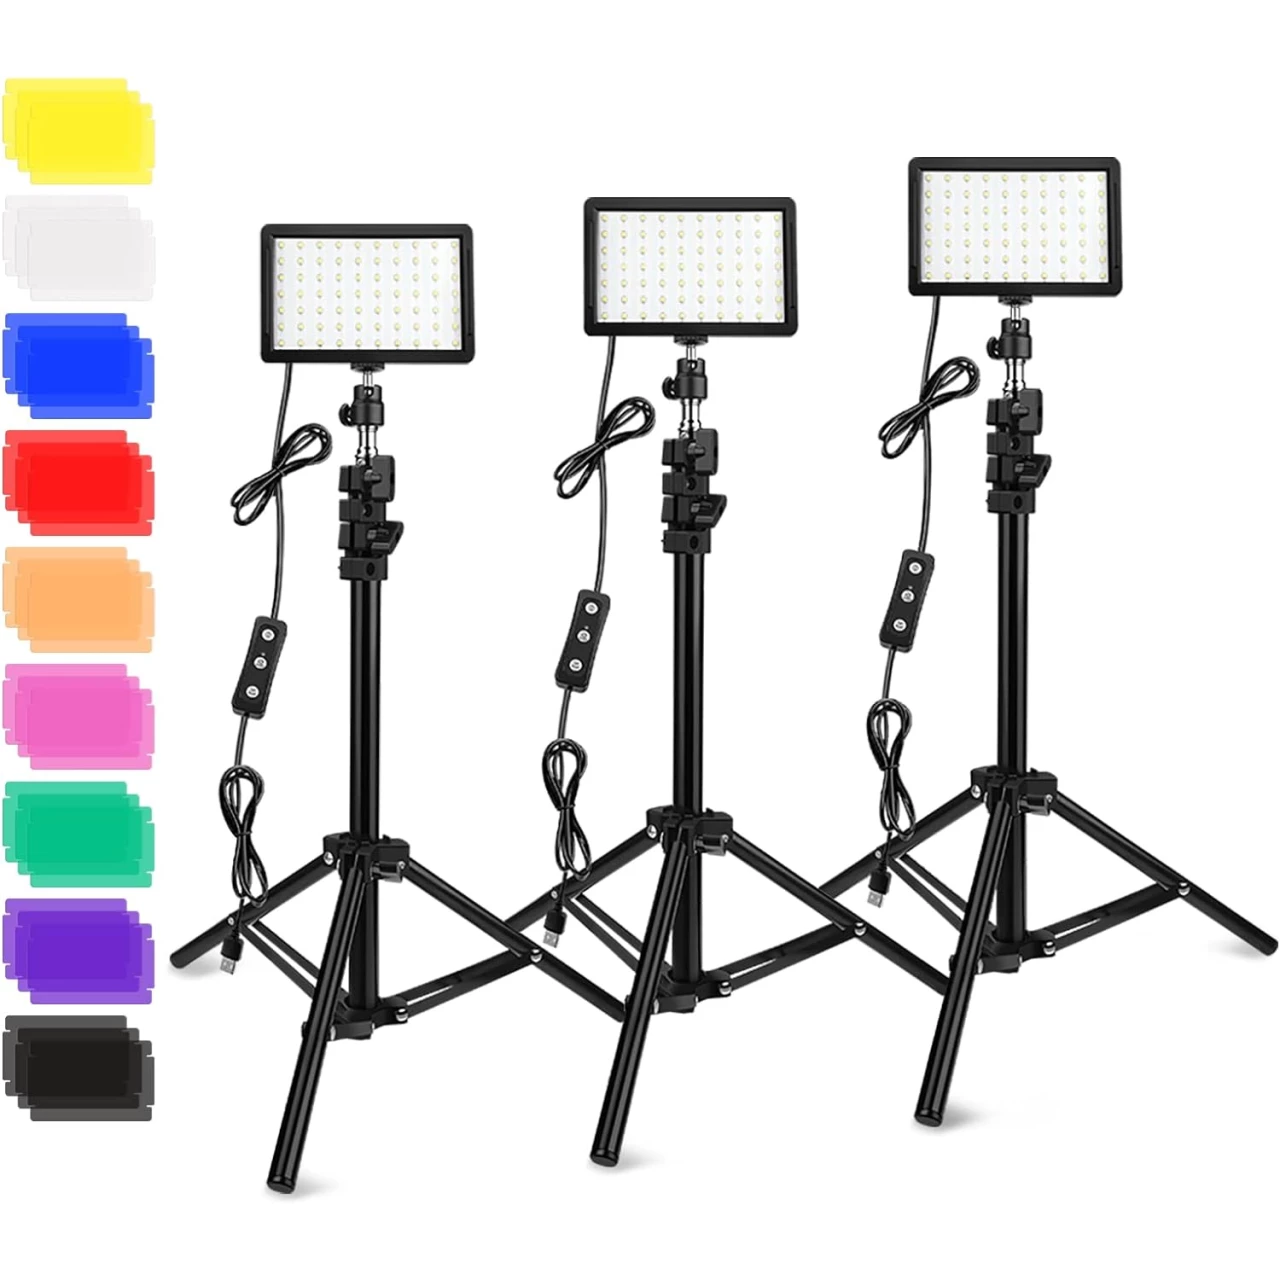 3 Packs 70 LED Video Light with Adjustable Tripod Stand/Color Filters, Obeamiu 5600K USB Studio Lighting Kit